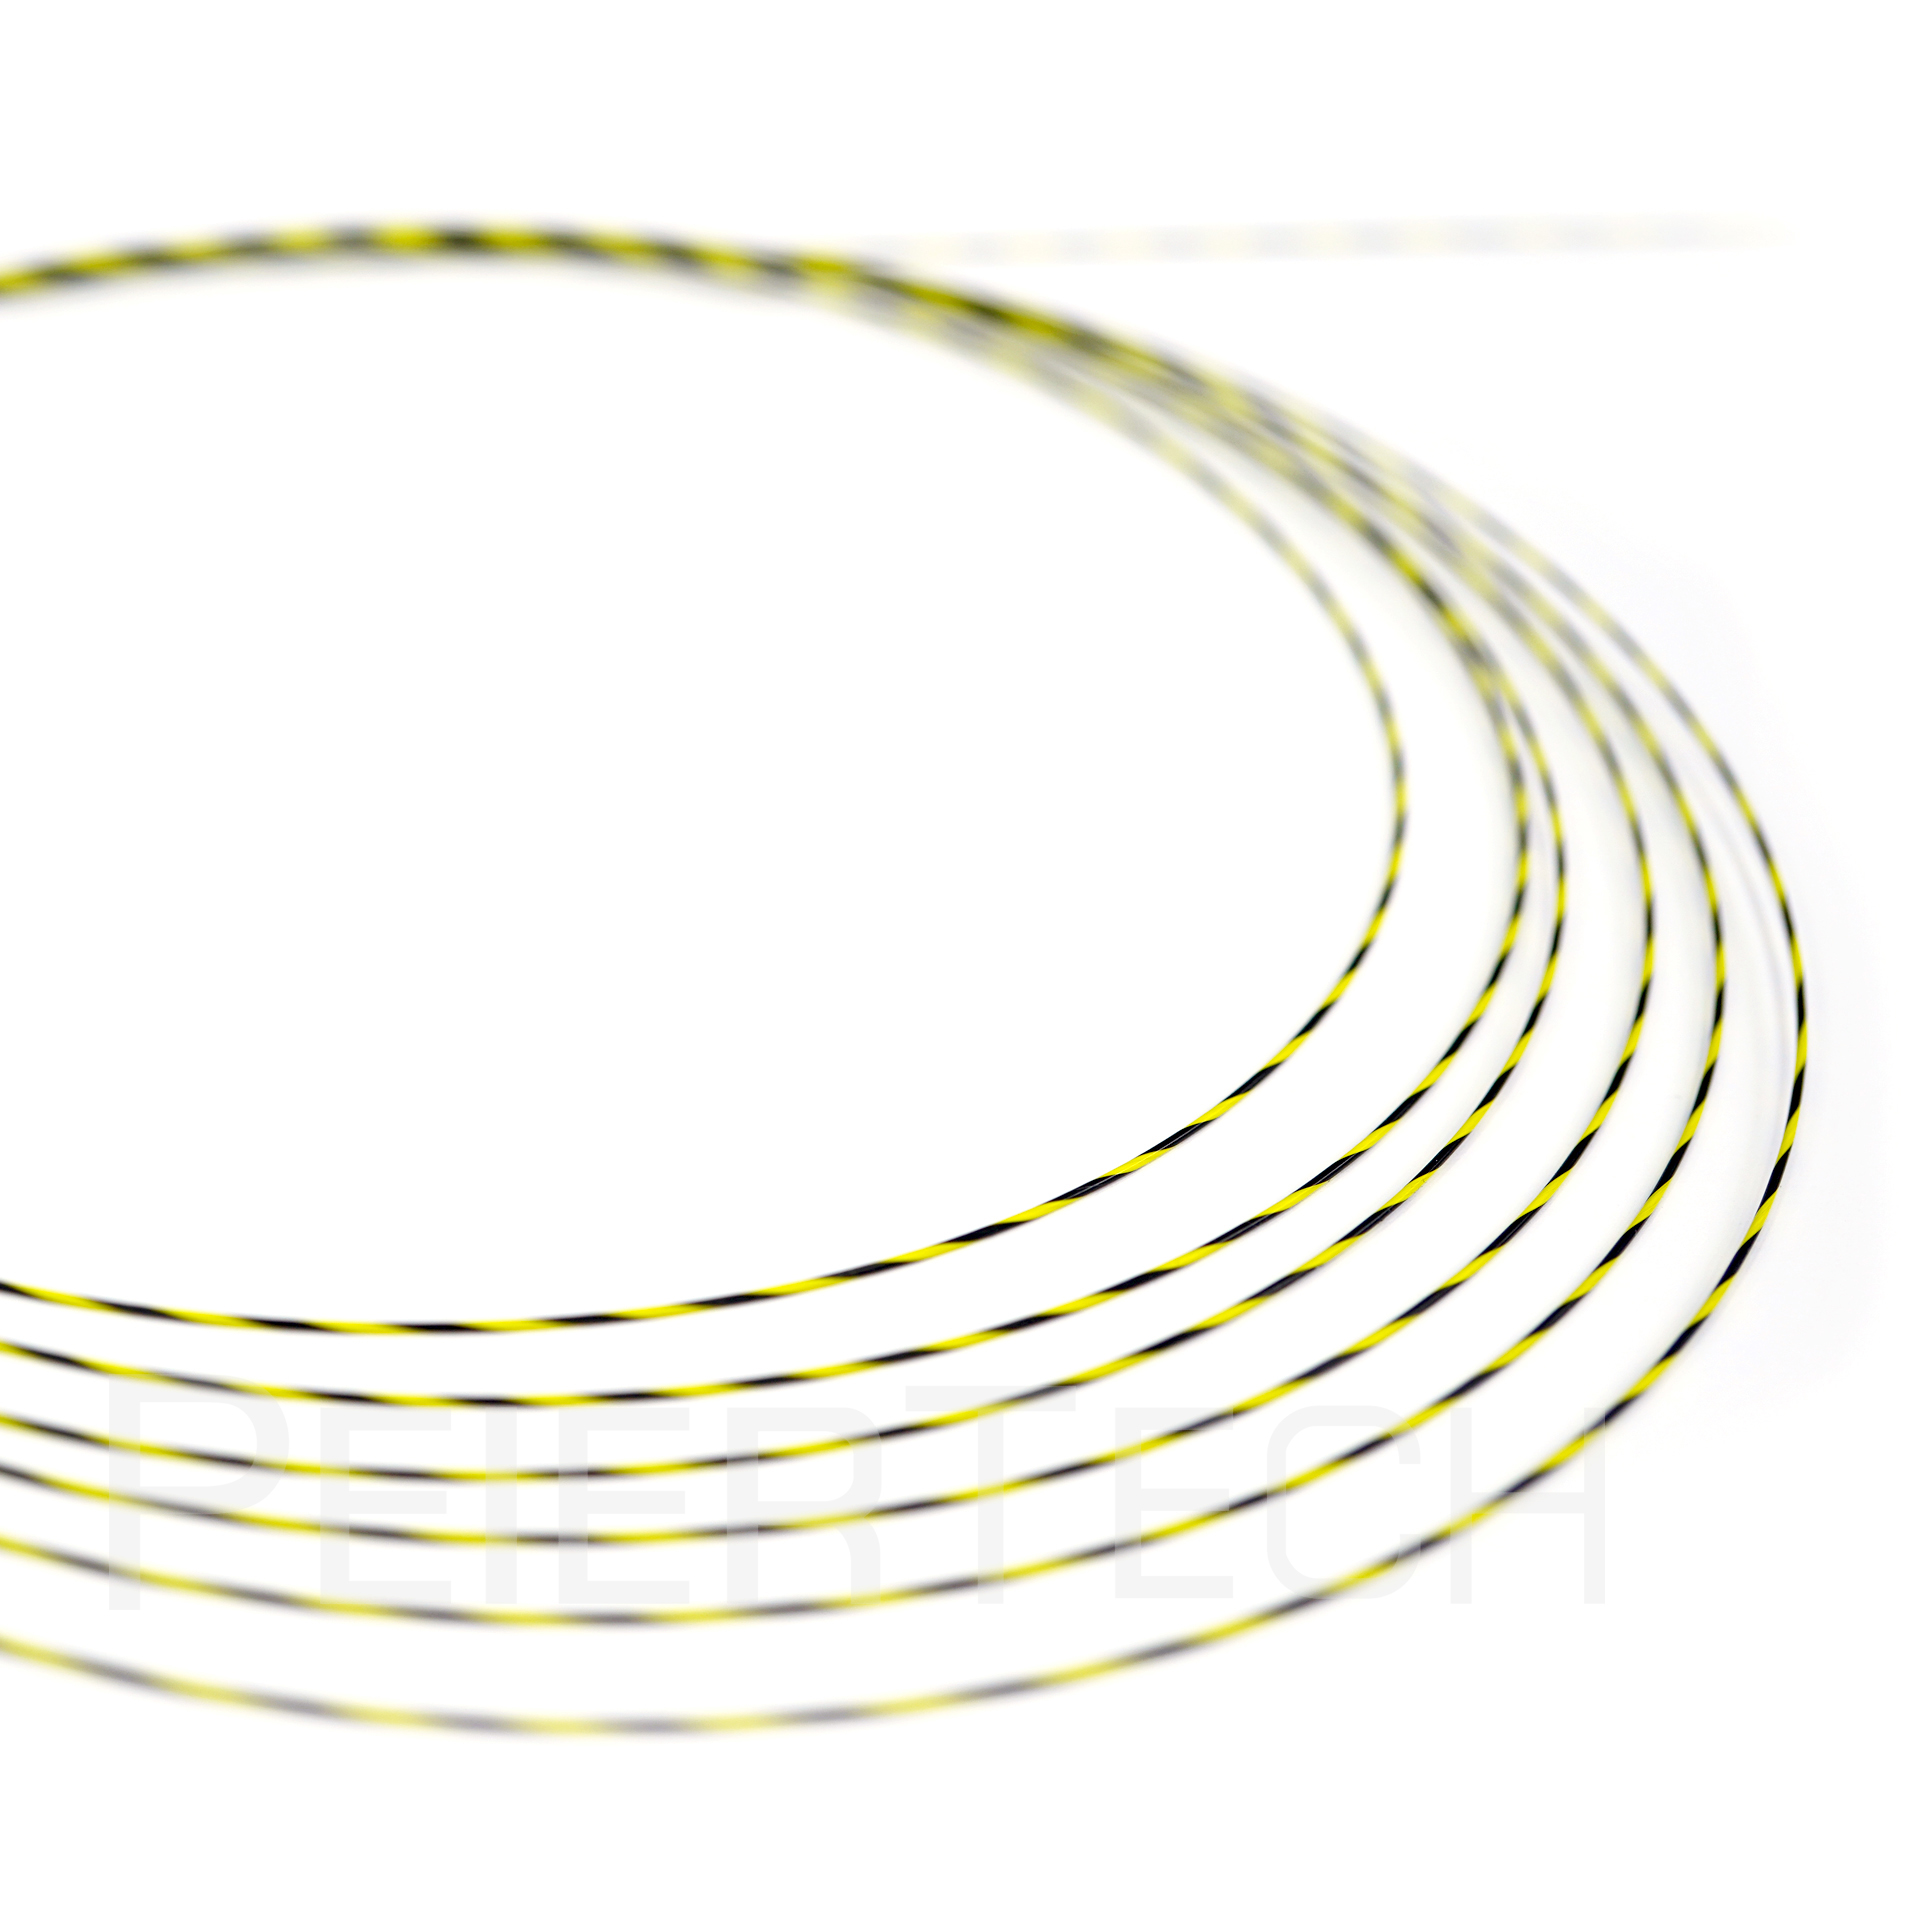 Nitinol Wire Nitinol Guide Wire Peiertech provides High Quality Low Inclusion Nitinol Materials